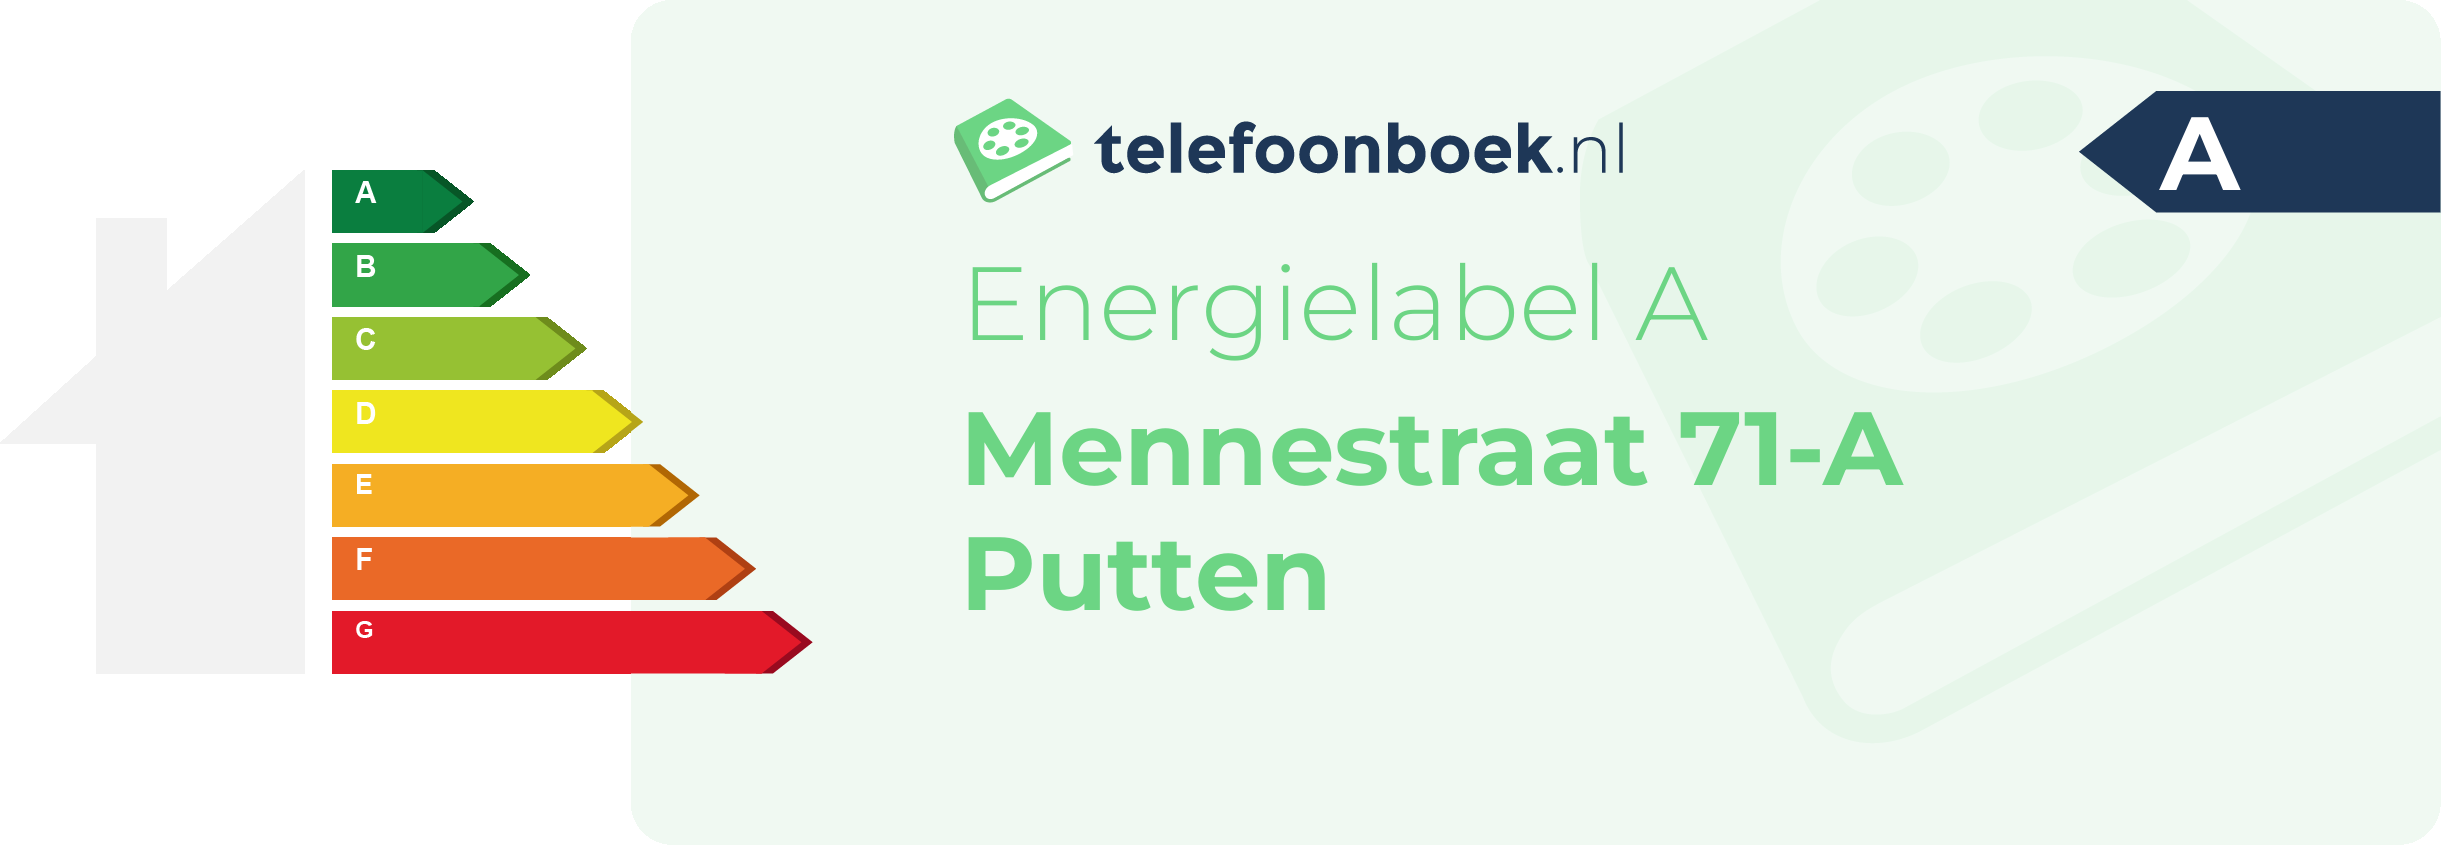 Energielabel Mennestraat 71-A Putten